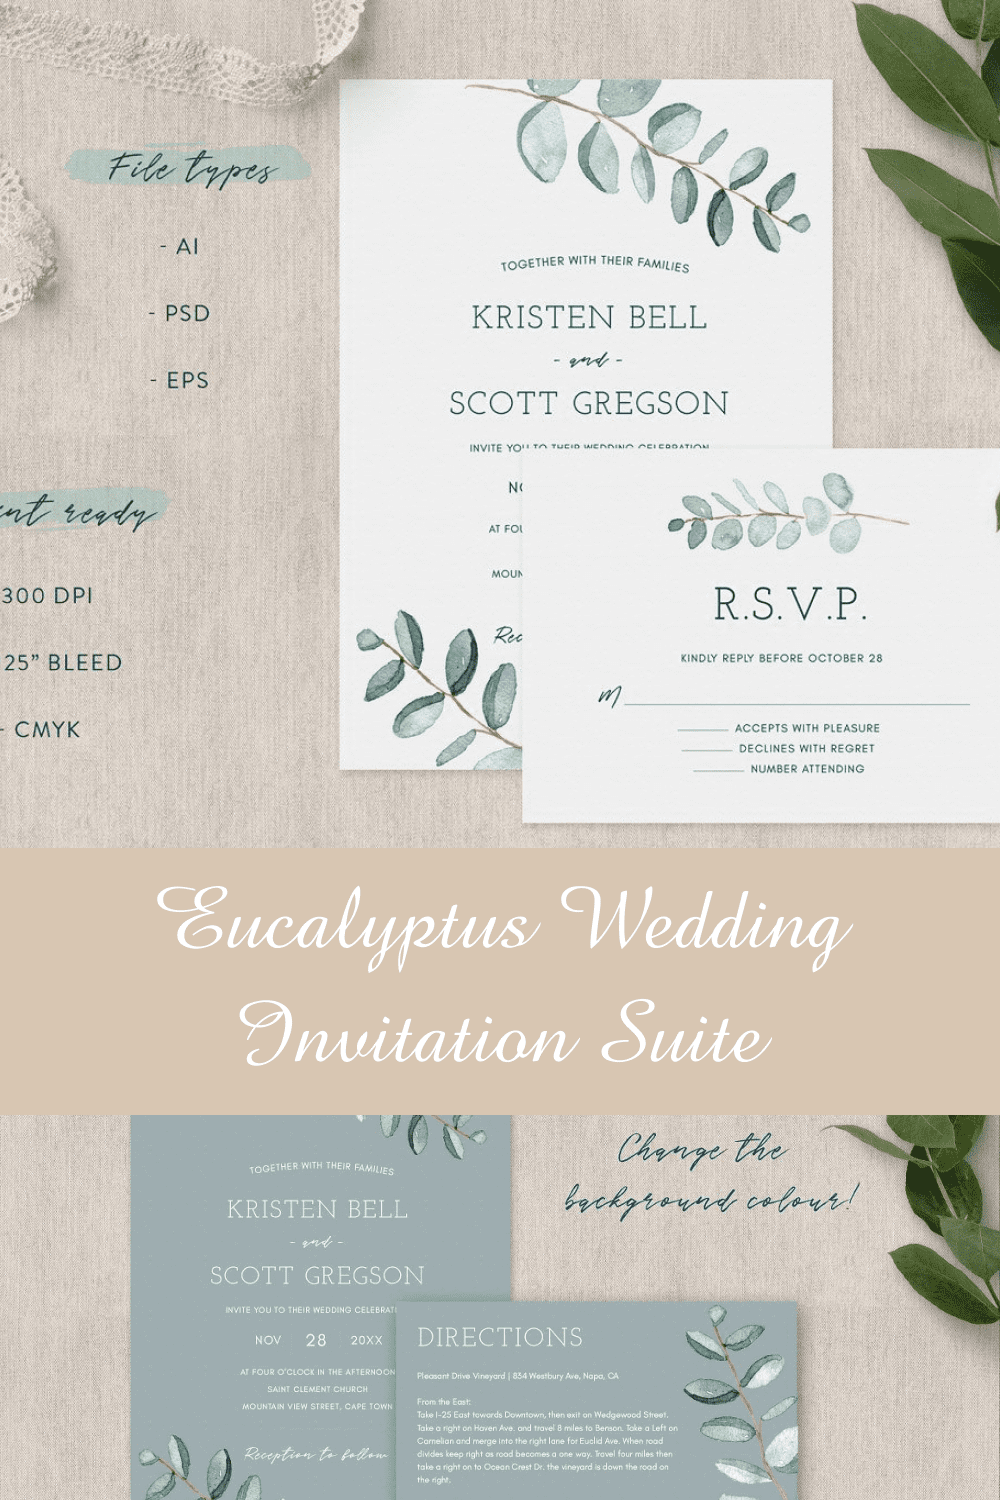 Eucalyptus Wedding Invitation Suite Pinterest image.